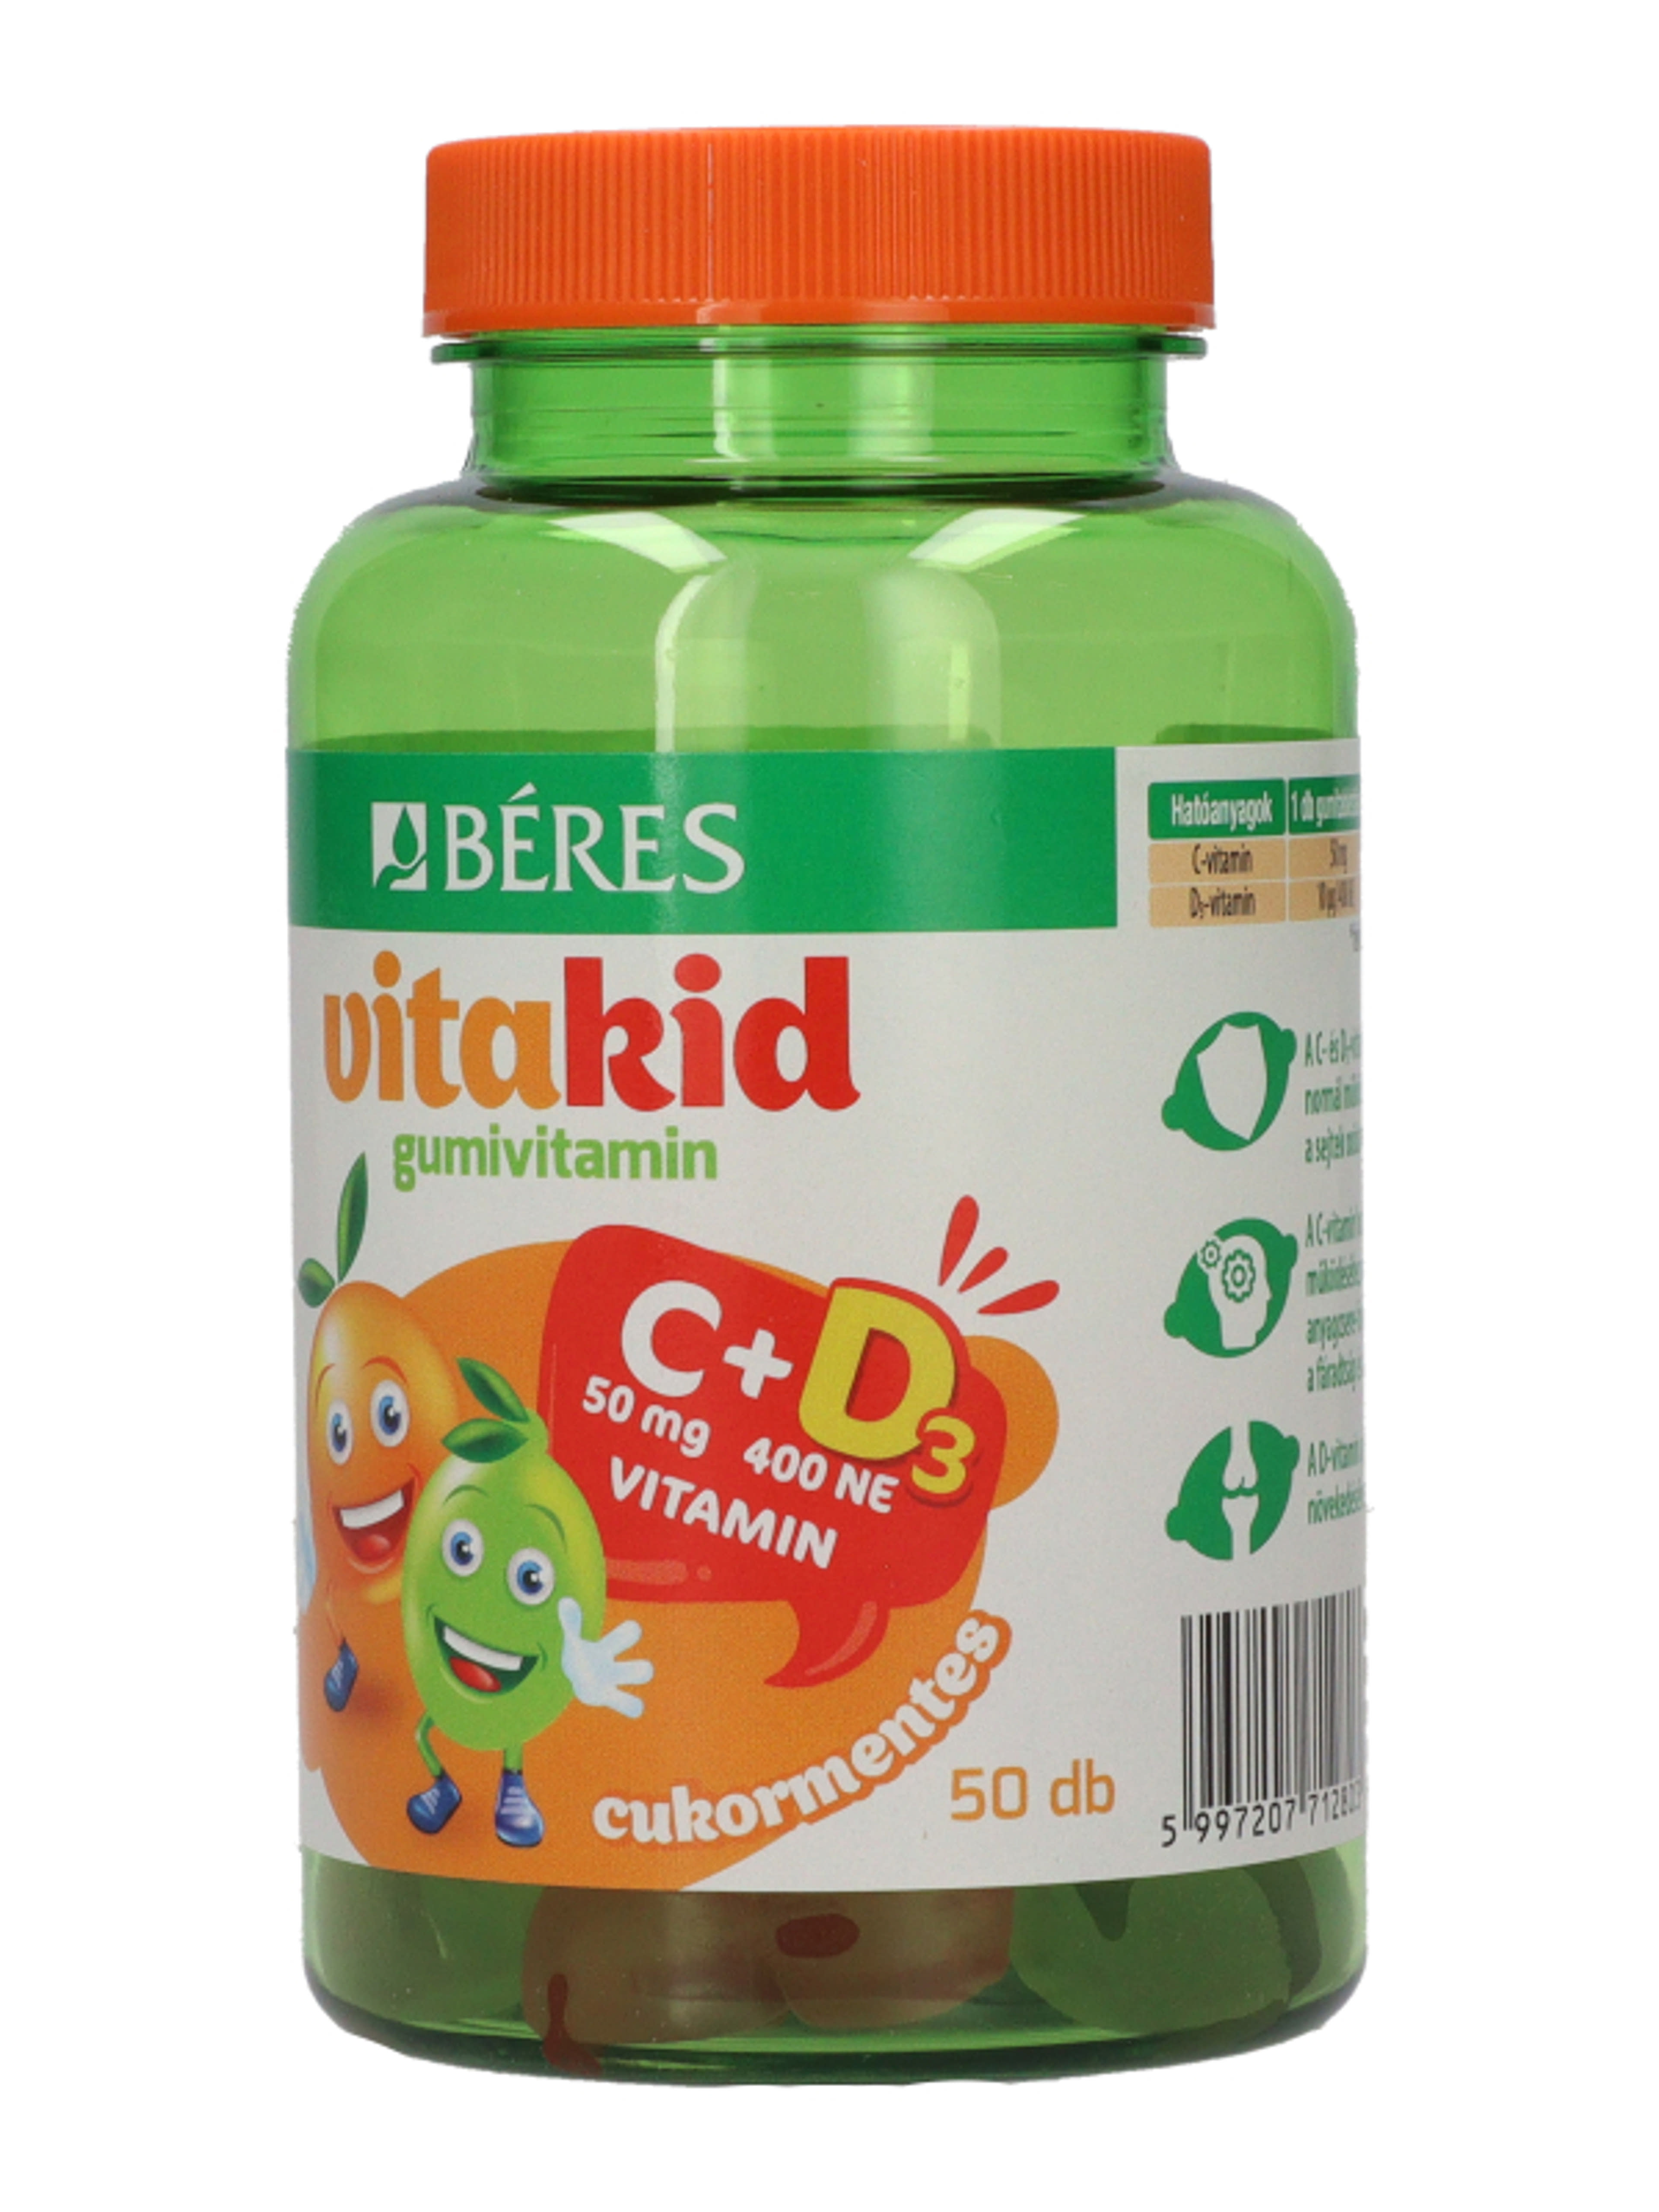 Béres Vitakid C+D3 Gumivitamin - 50 db-4